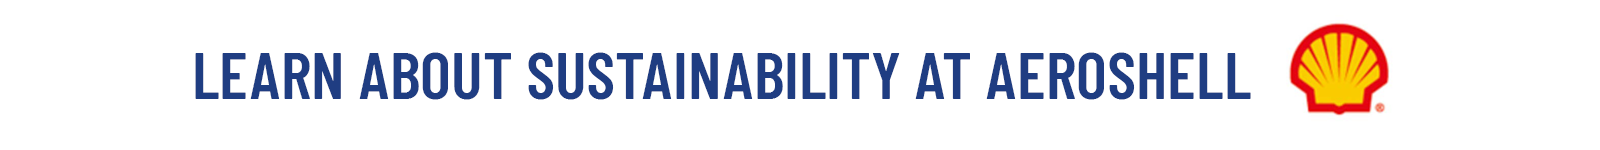 Aeroshell sustainability text banner